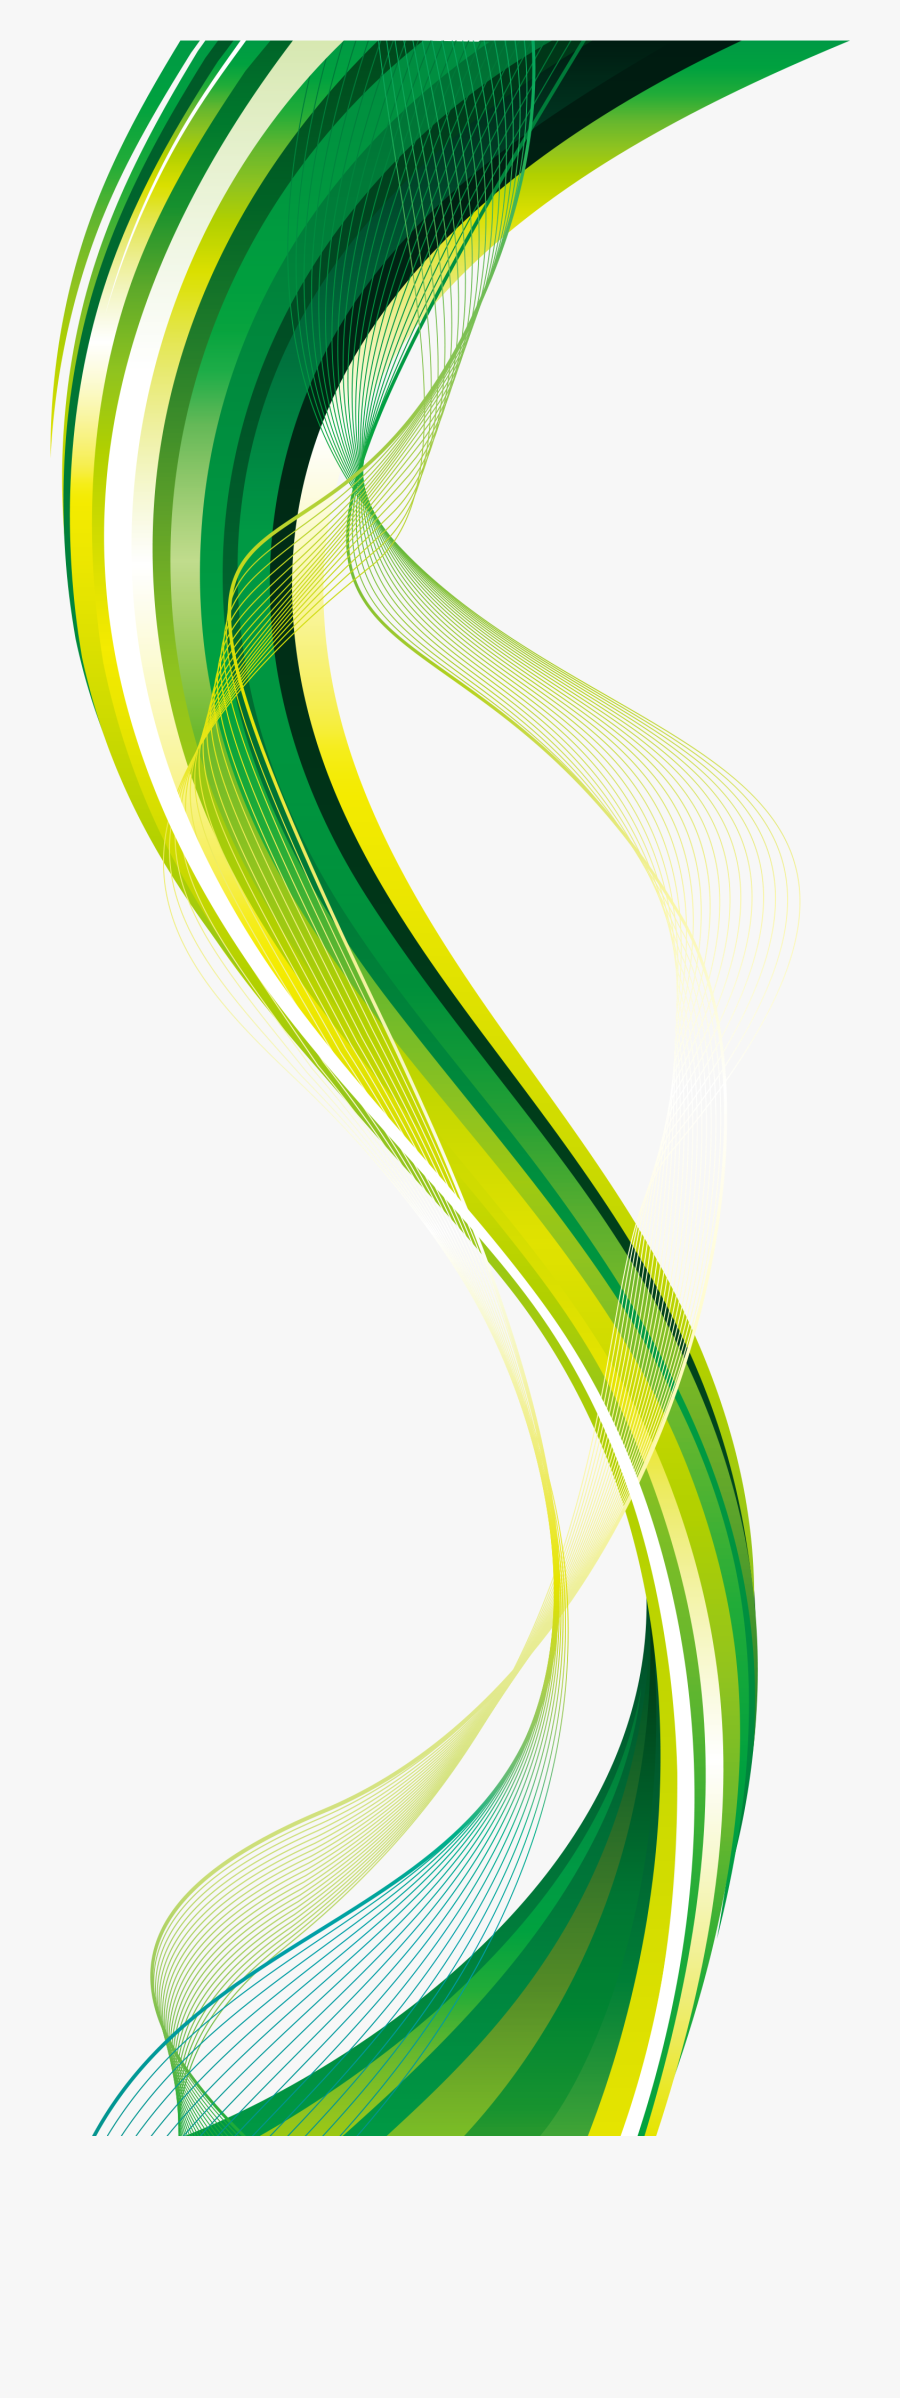 Transparent Vector Images - Green Transparent Background Design Png, Transparent Clipart